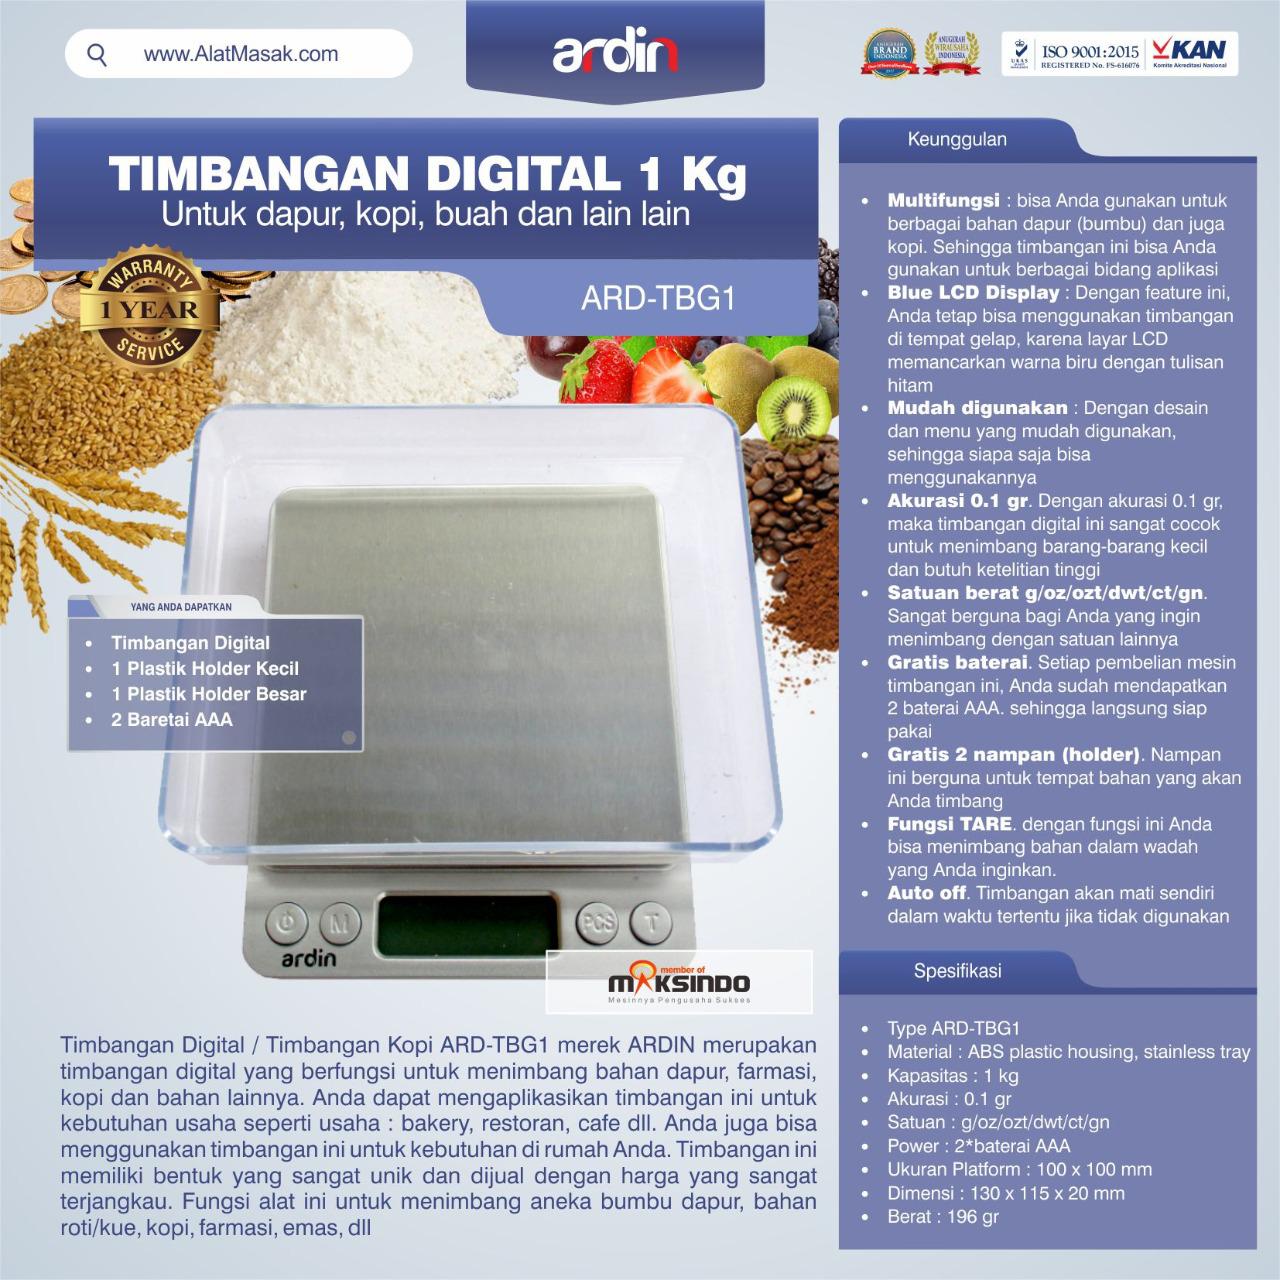 Timbangan Digital Dapur 1 kg / Timbangan Kopi ARD-TBG1